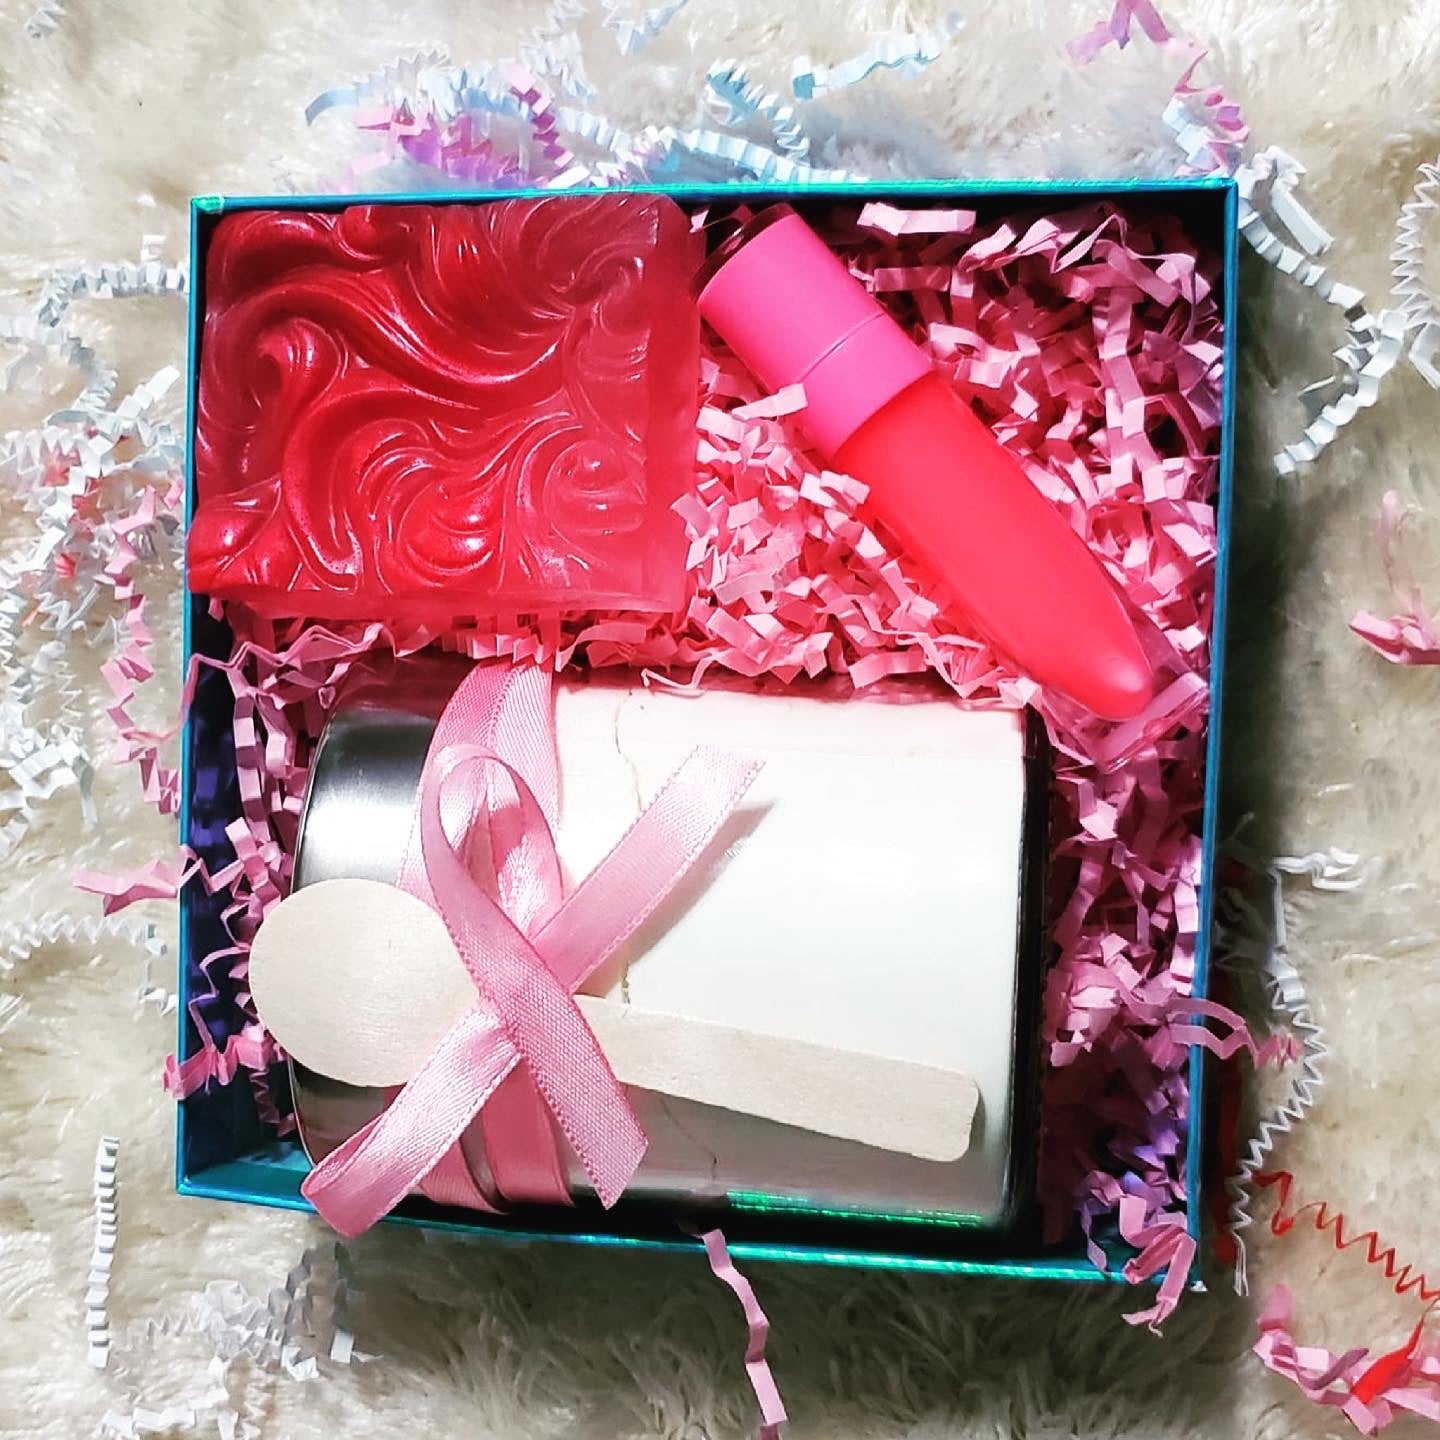 Goat Milk Bath Powder, Himalayan Pink Bath Salt, Massage Soap, Lip Gloss, Gift for Mom, Wife, Girlfriend